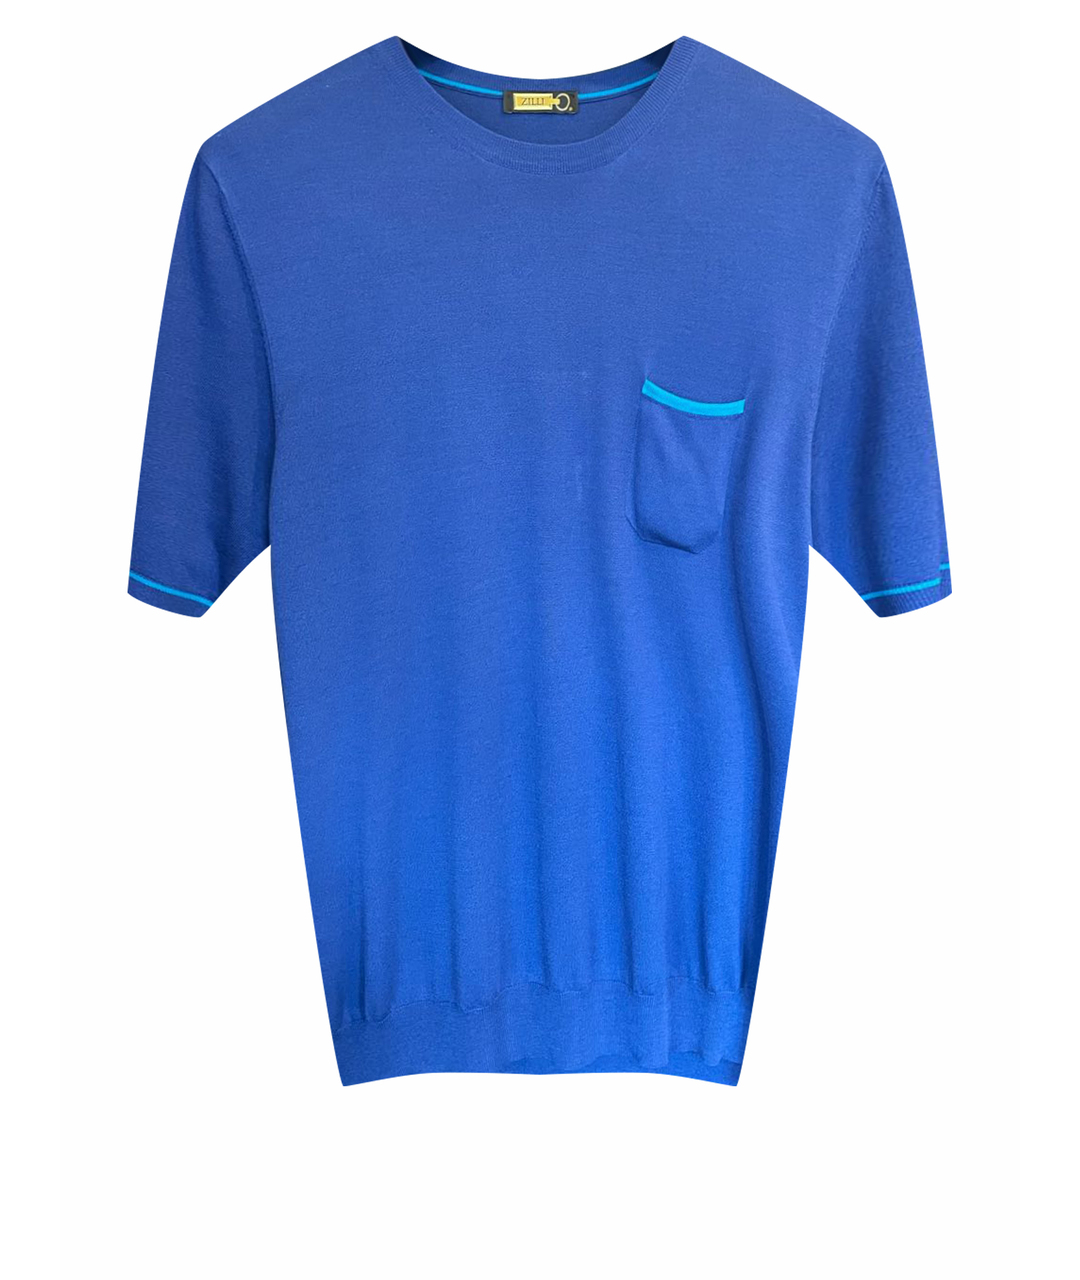 ZILLI Синий шелковый джемпер / свитер, фото 1